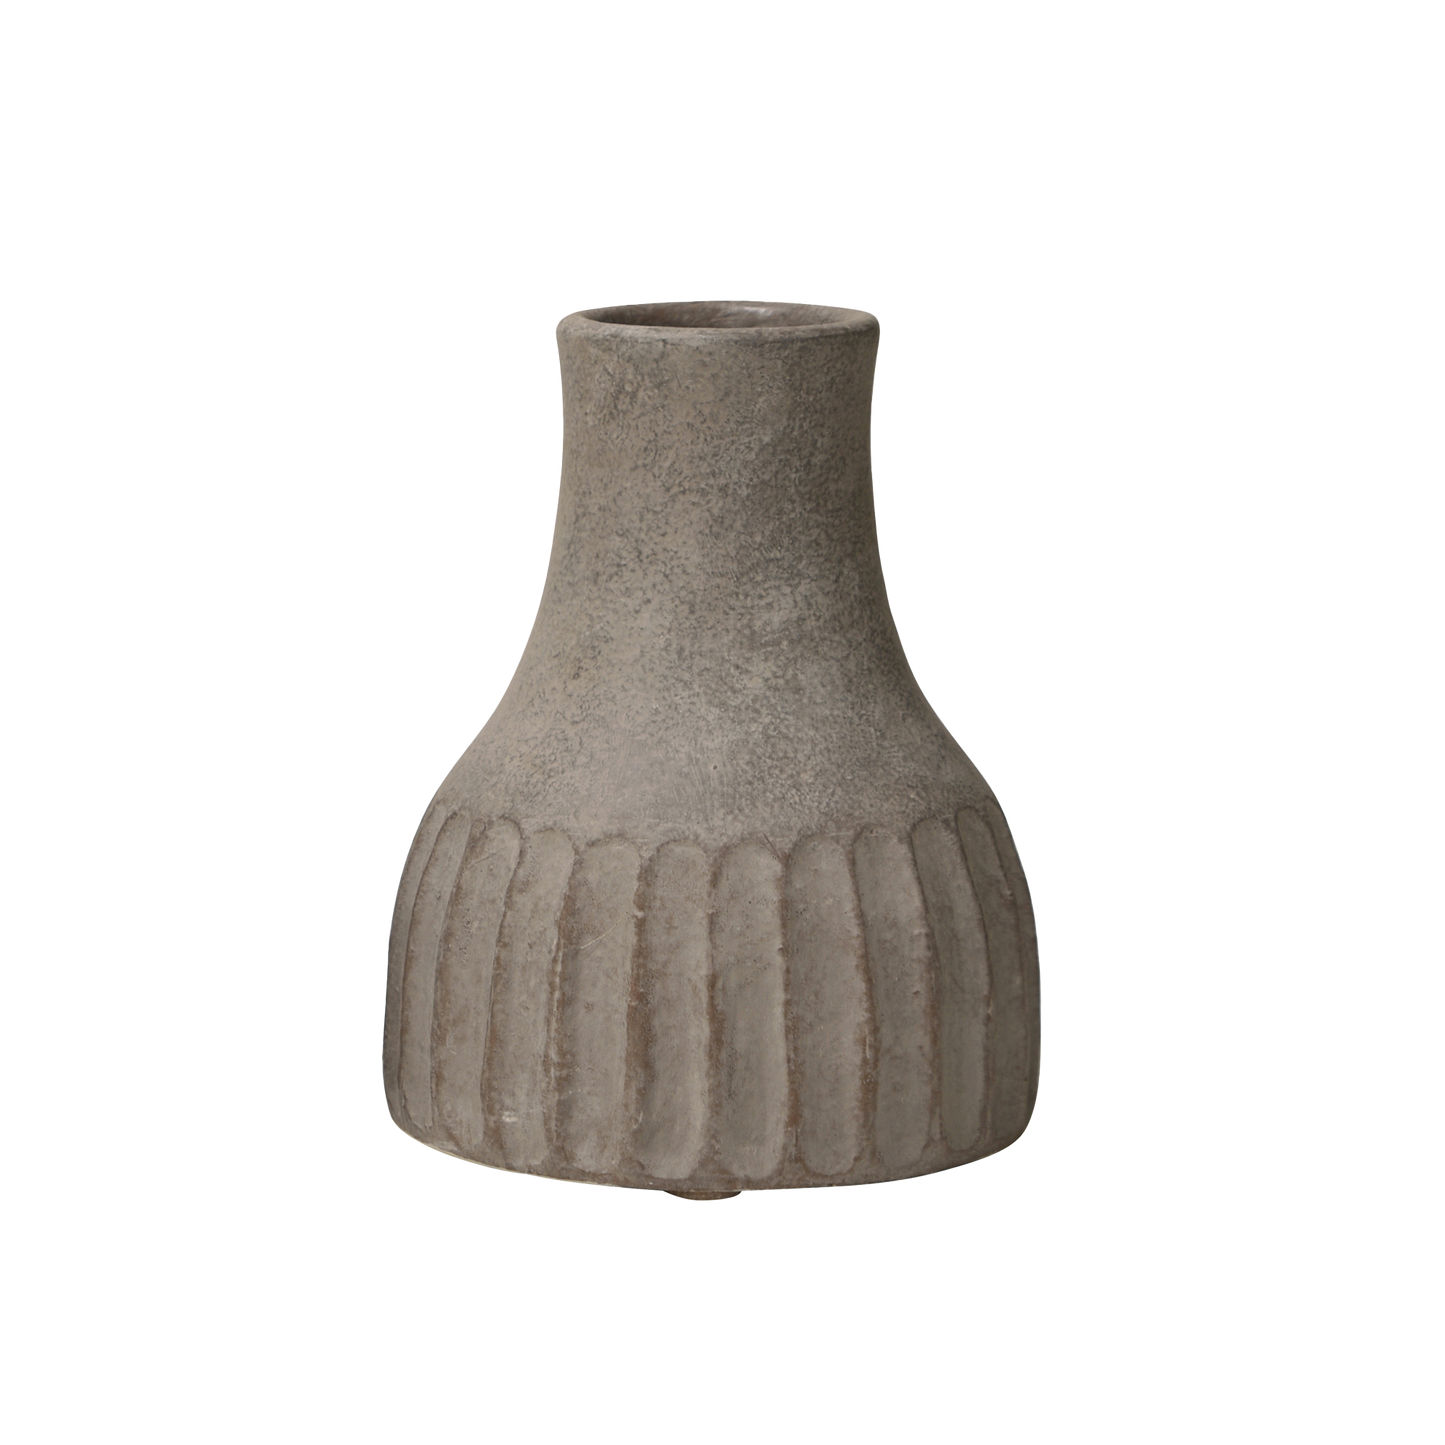 Textured terracotta vase grey